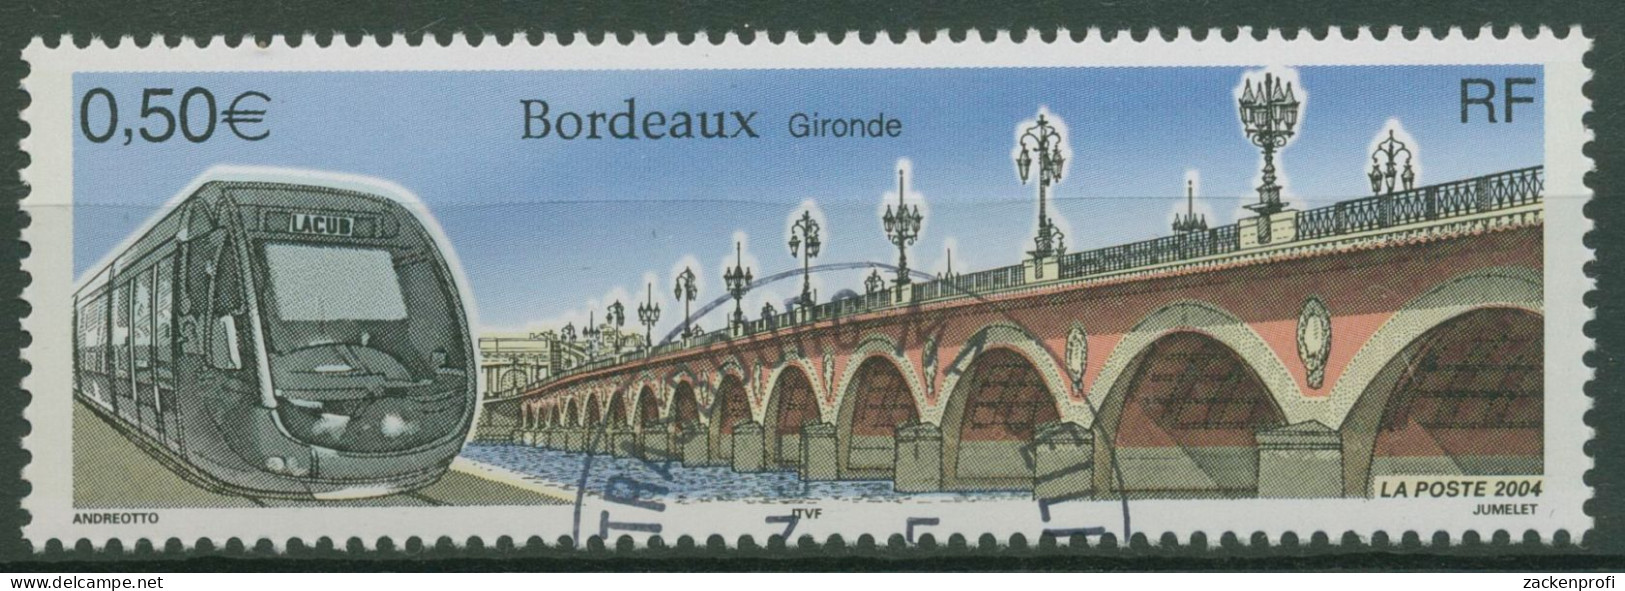 Frankreich 2004 Tourismus Straßenbahn Garonne-Brücke Bordeaux 3809 Gestempelt - Used Stamps